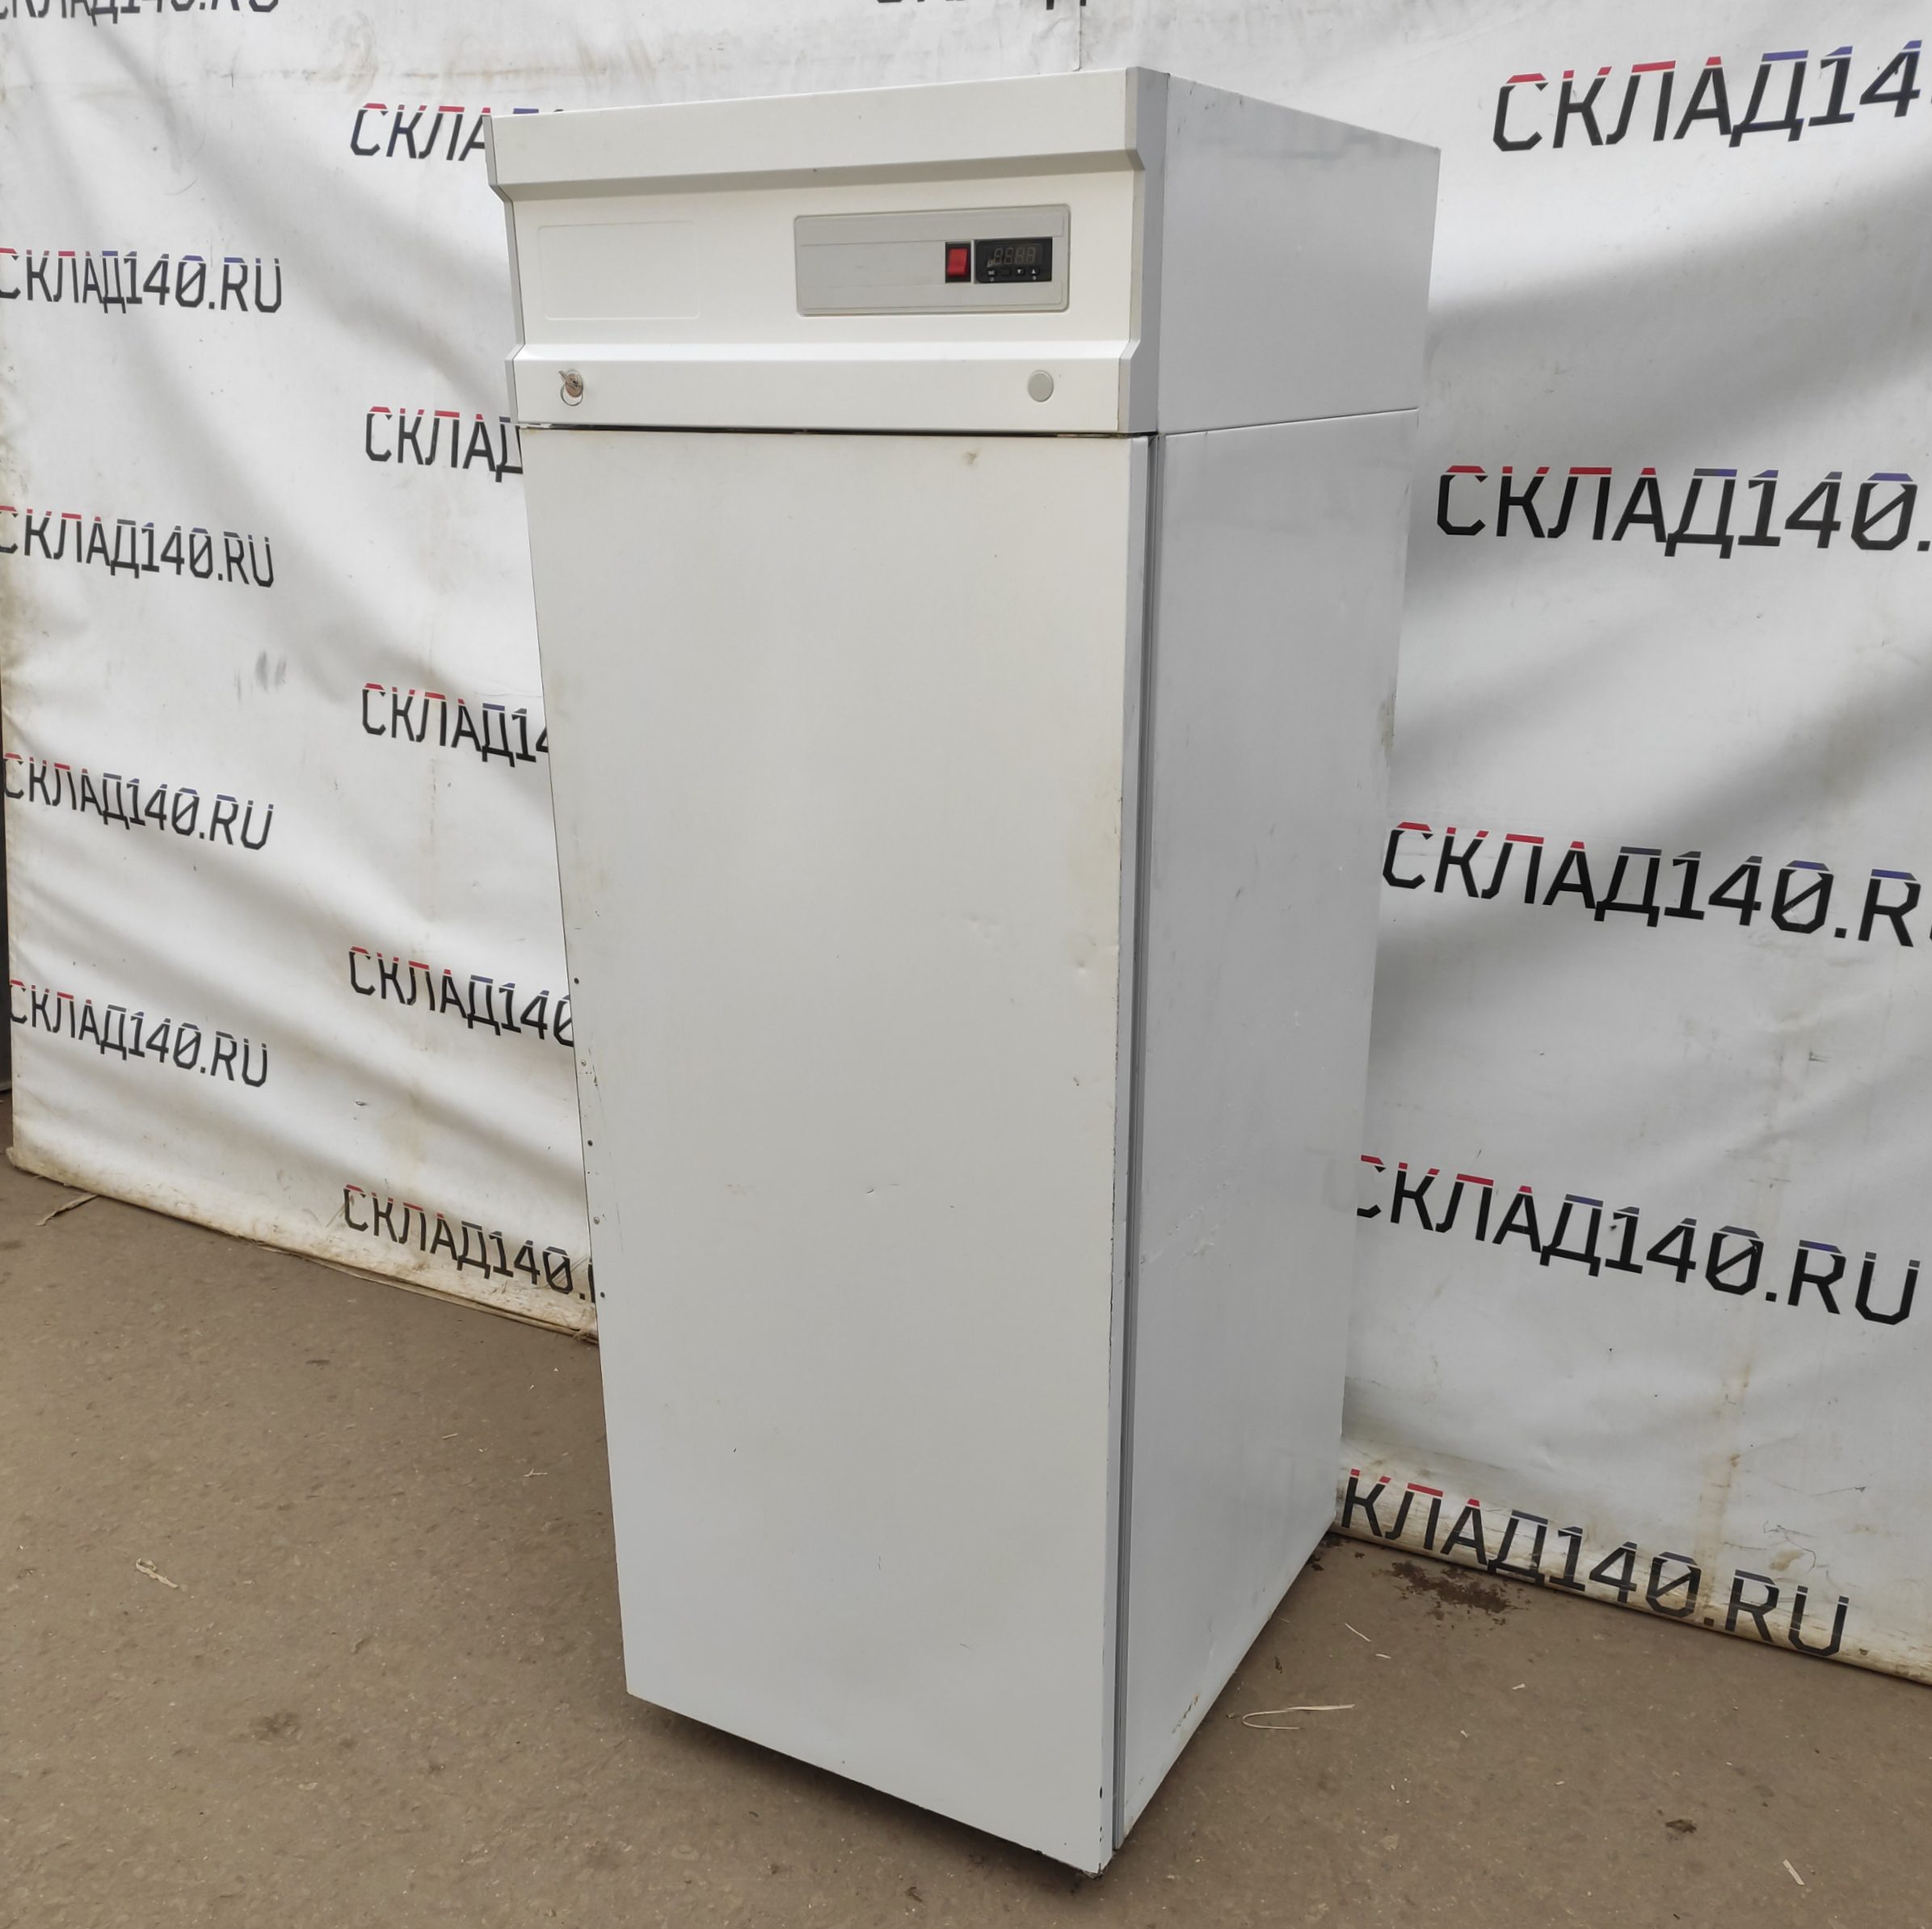 Cb107 s. Шкаф холодильный cb107-s.